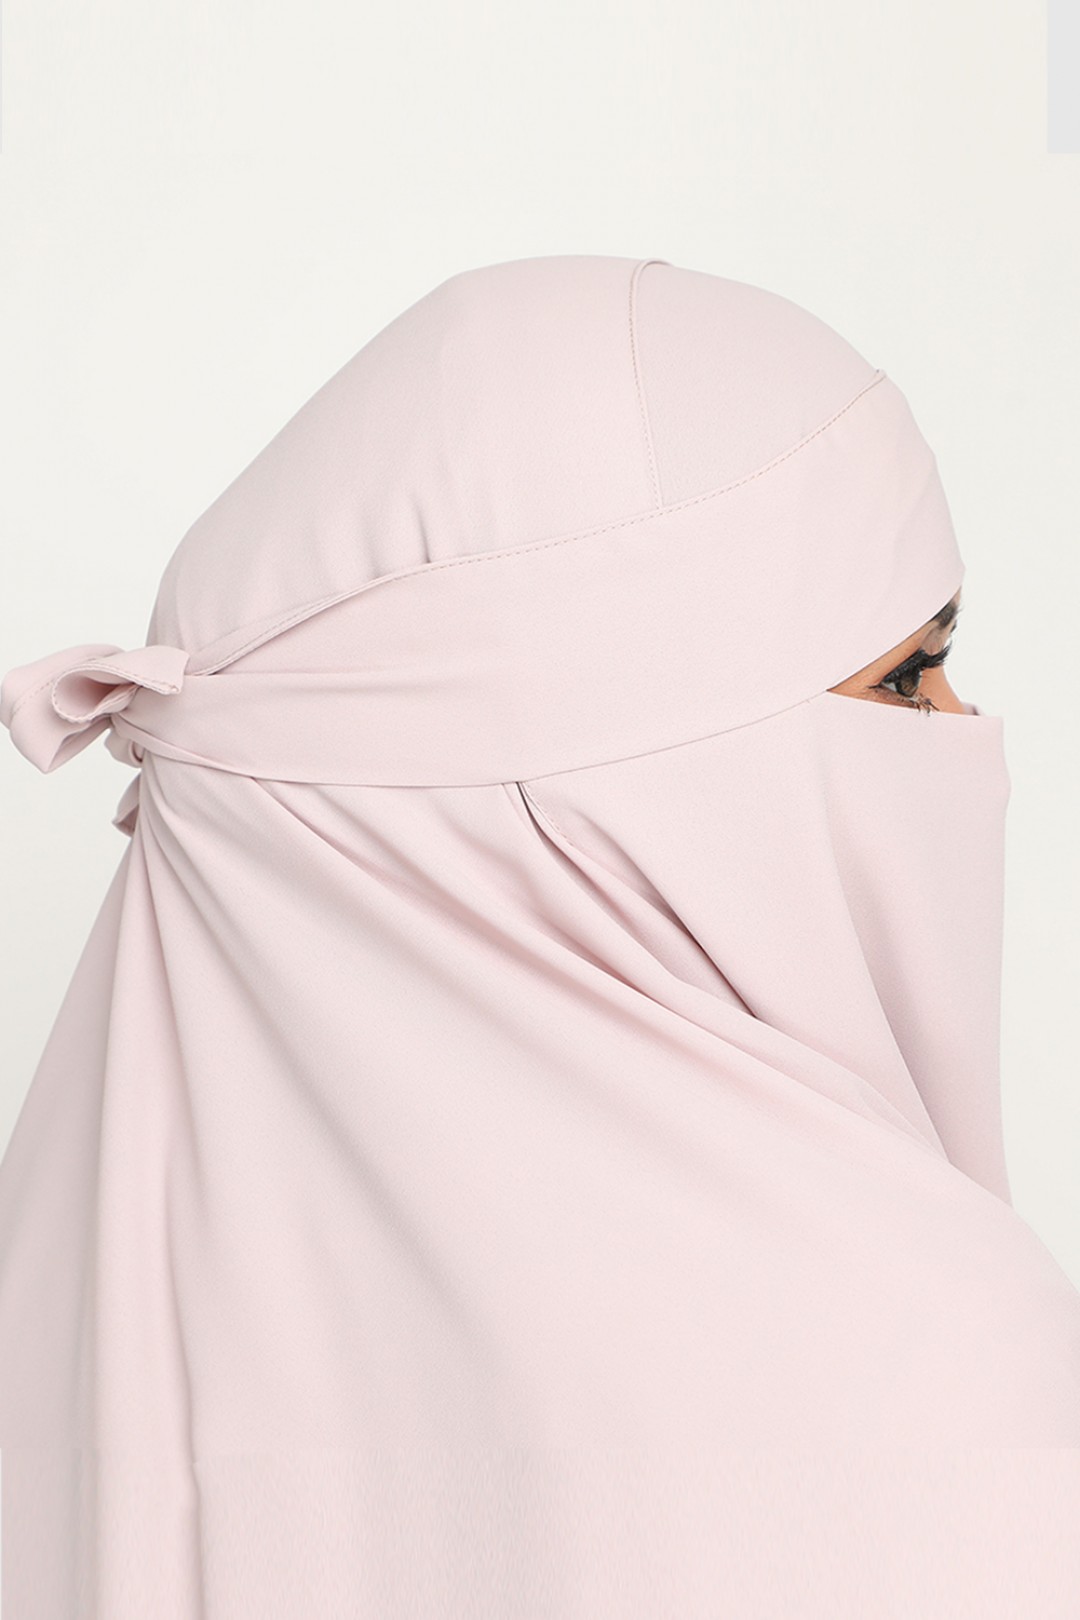 As-Is Niqab Pale Shell